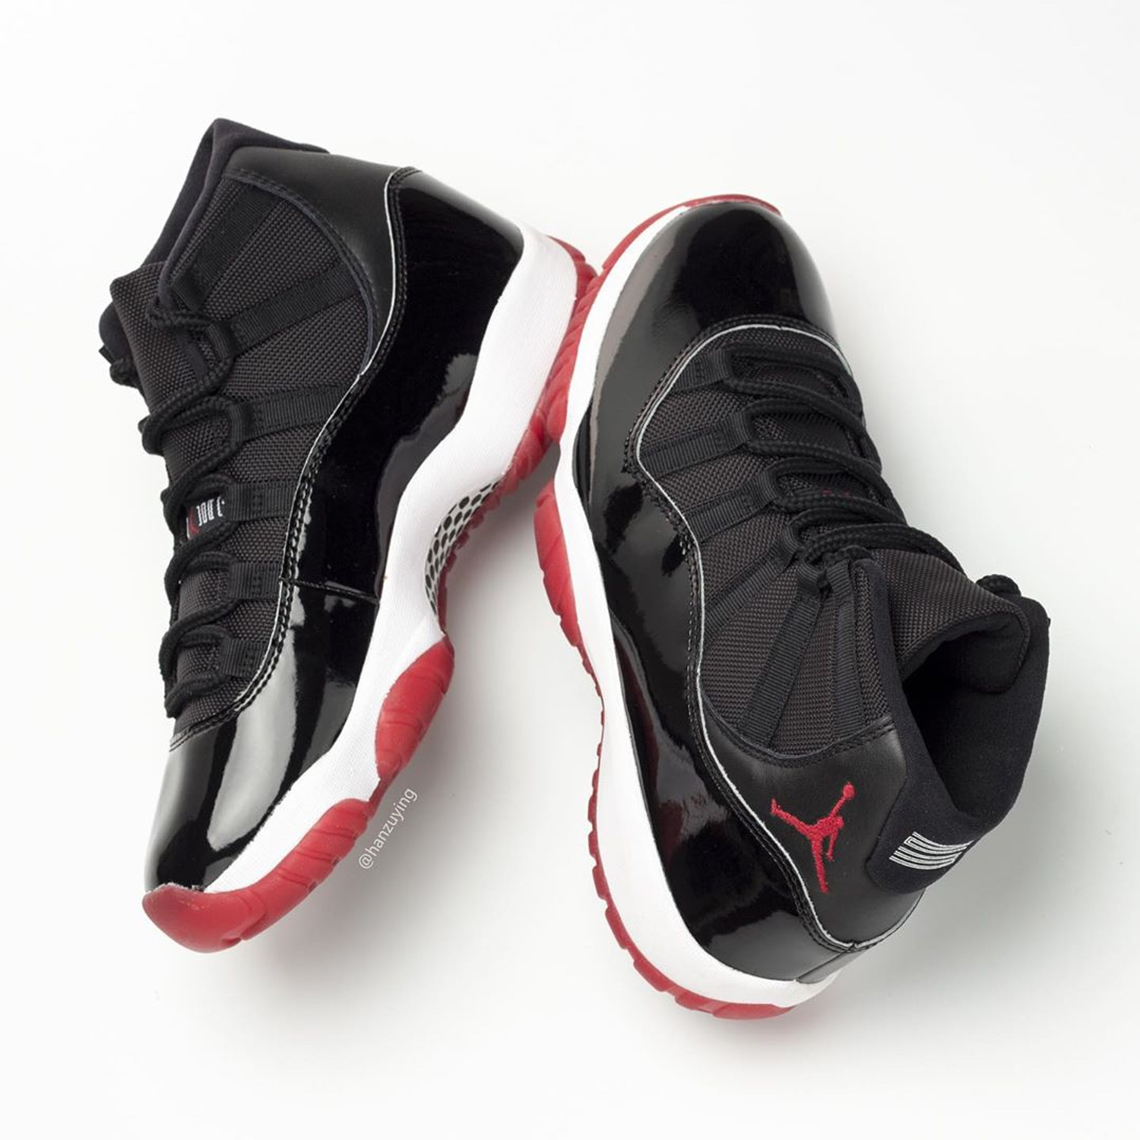 Jordan 11 Bred 2019 Release Info | SneakerNews.com